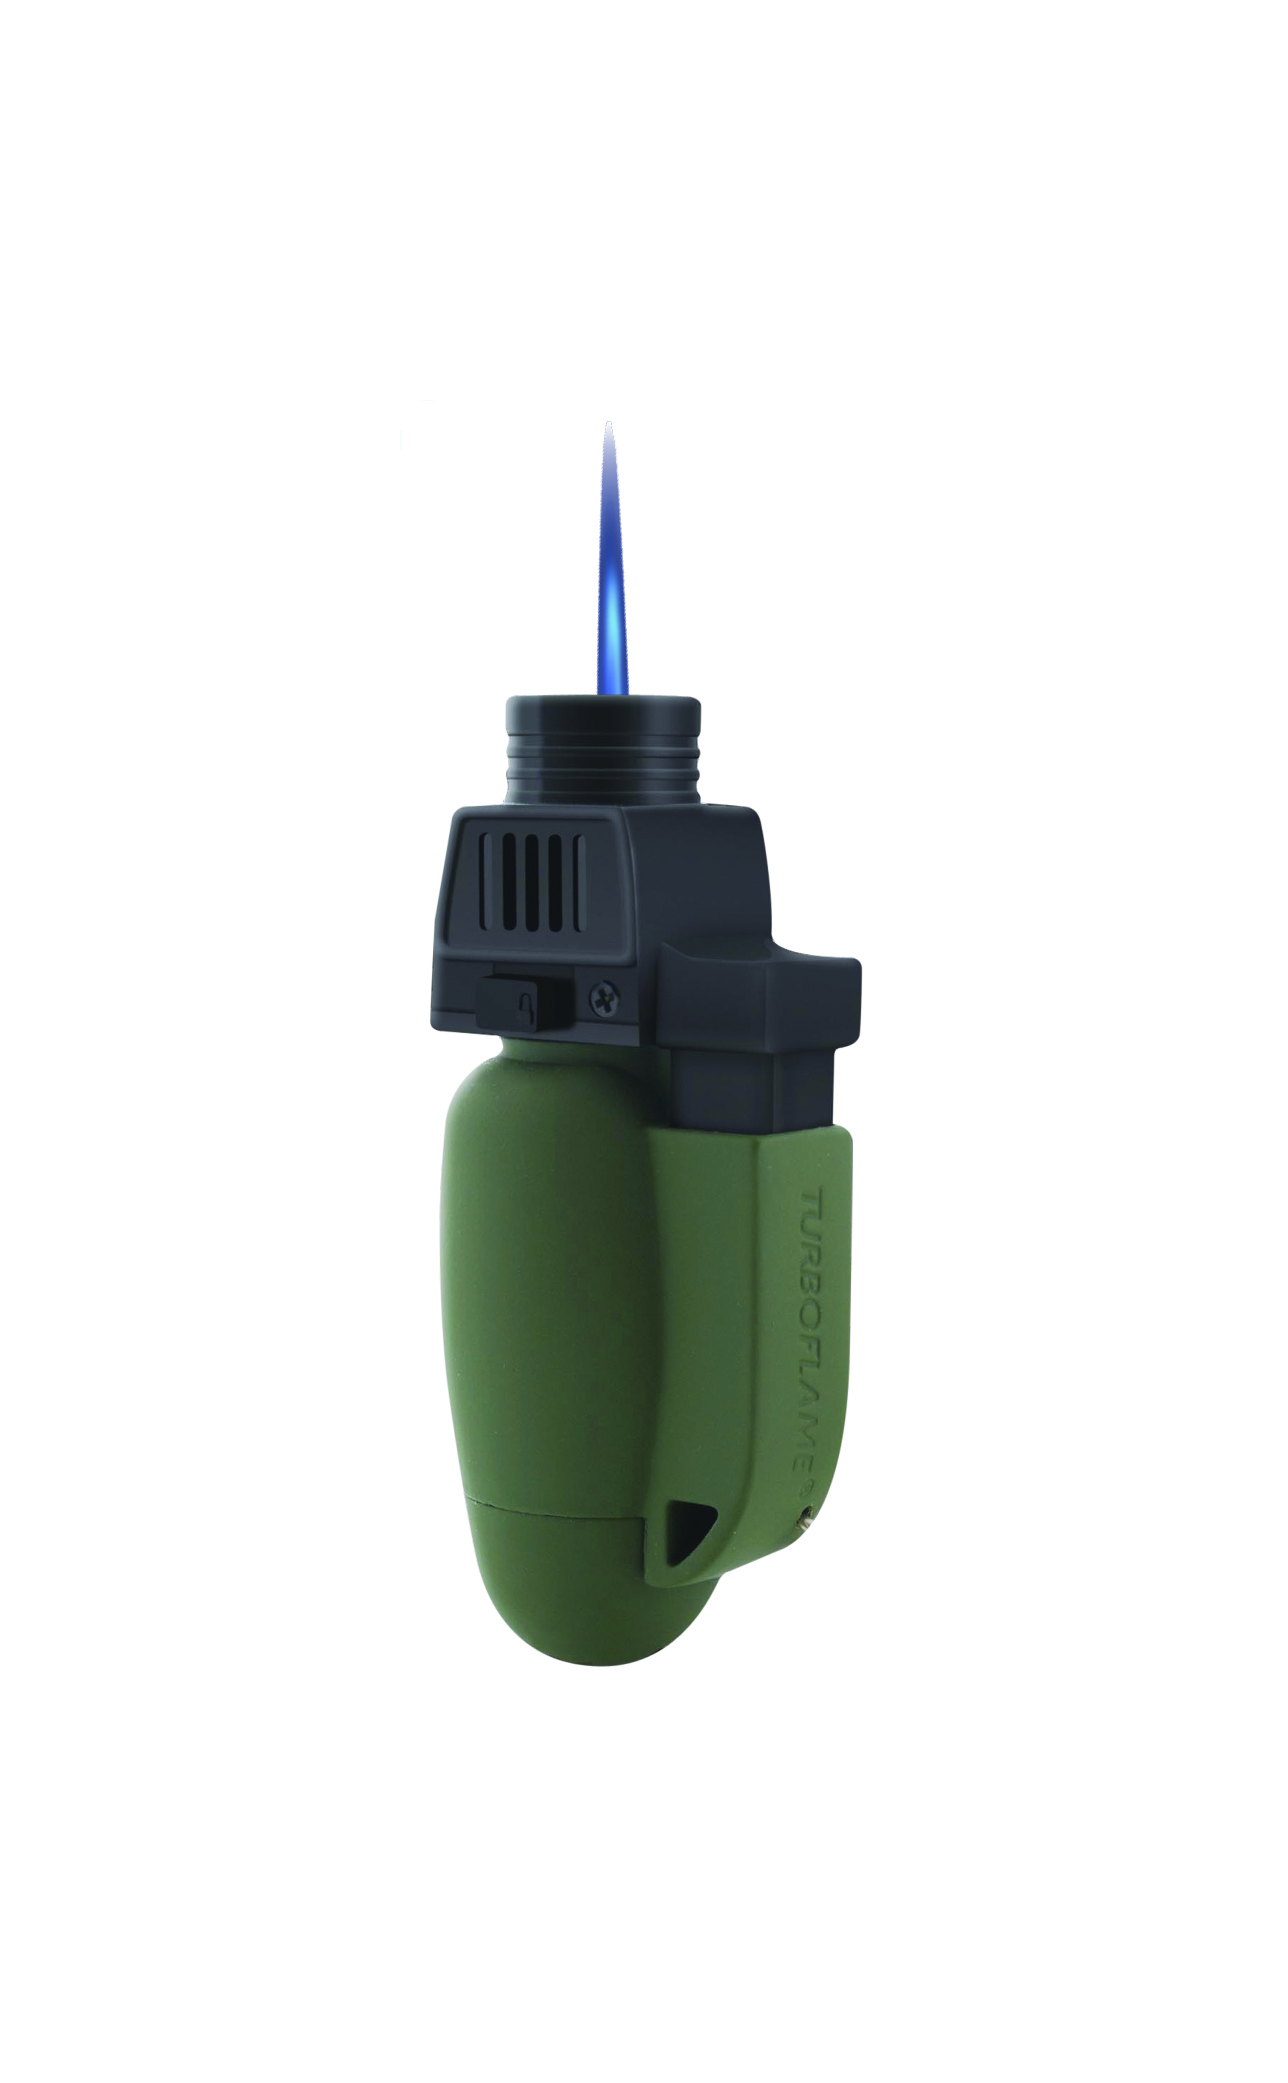 OL Turboflame Military Green Mini Blow Torch Laser Jet Windproof Field Lighter 